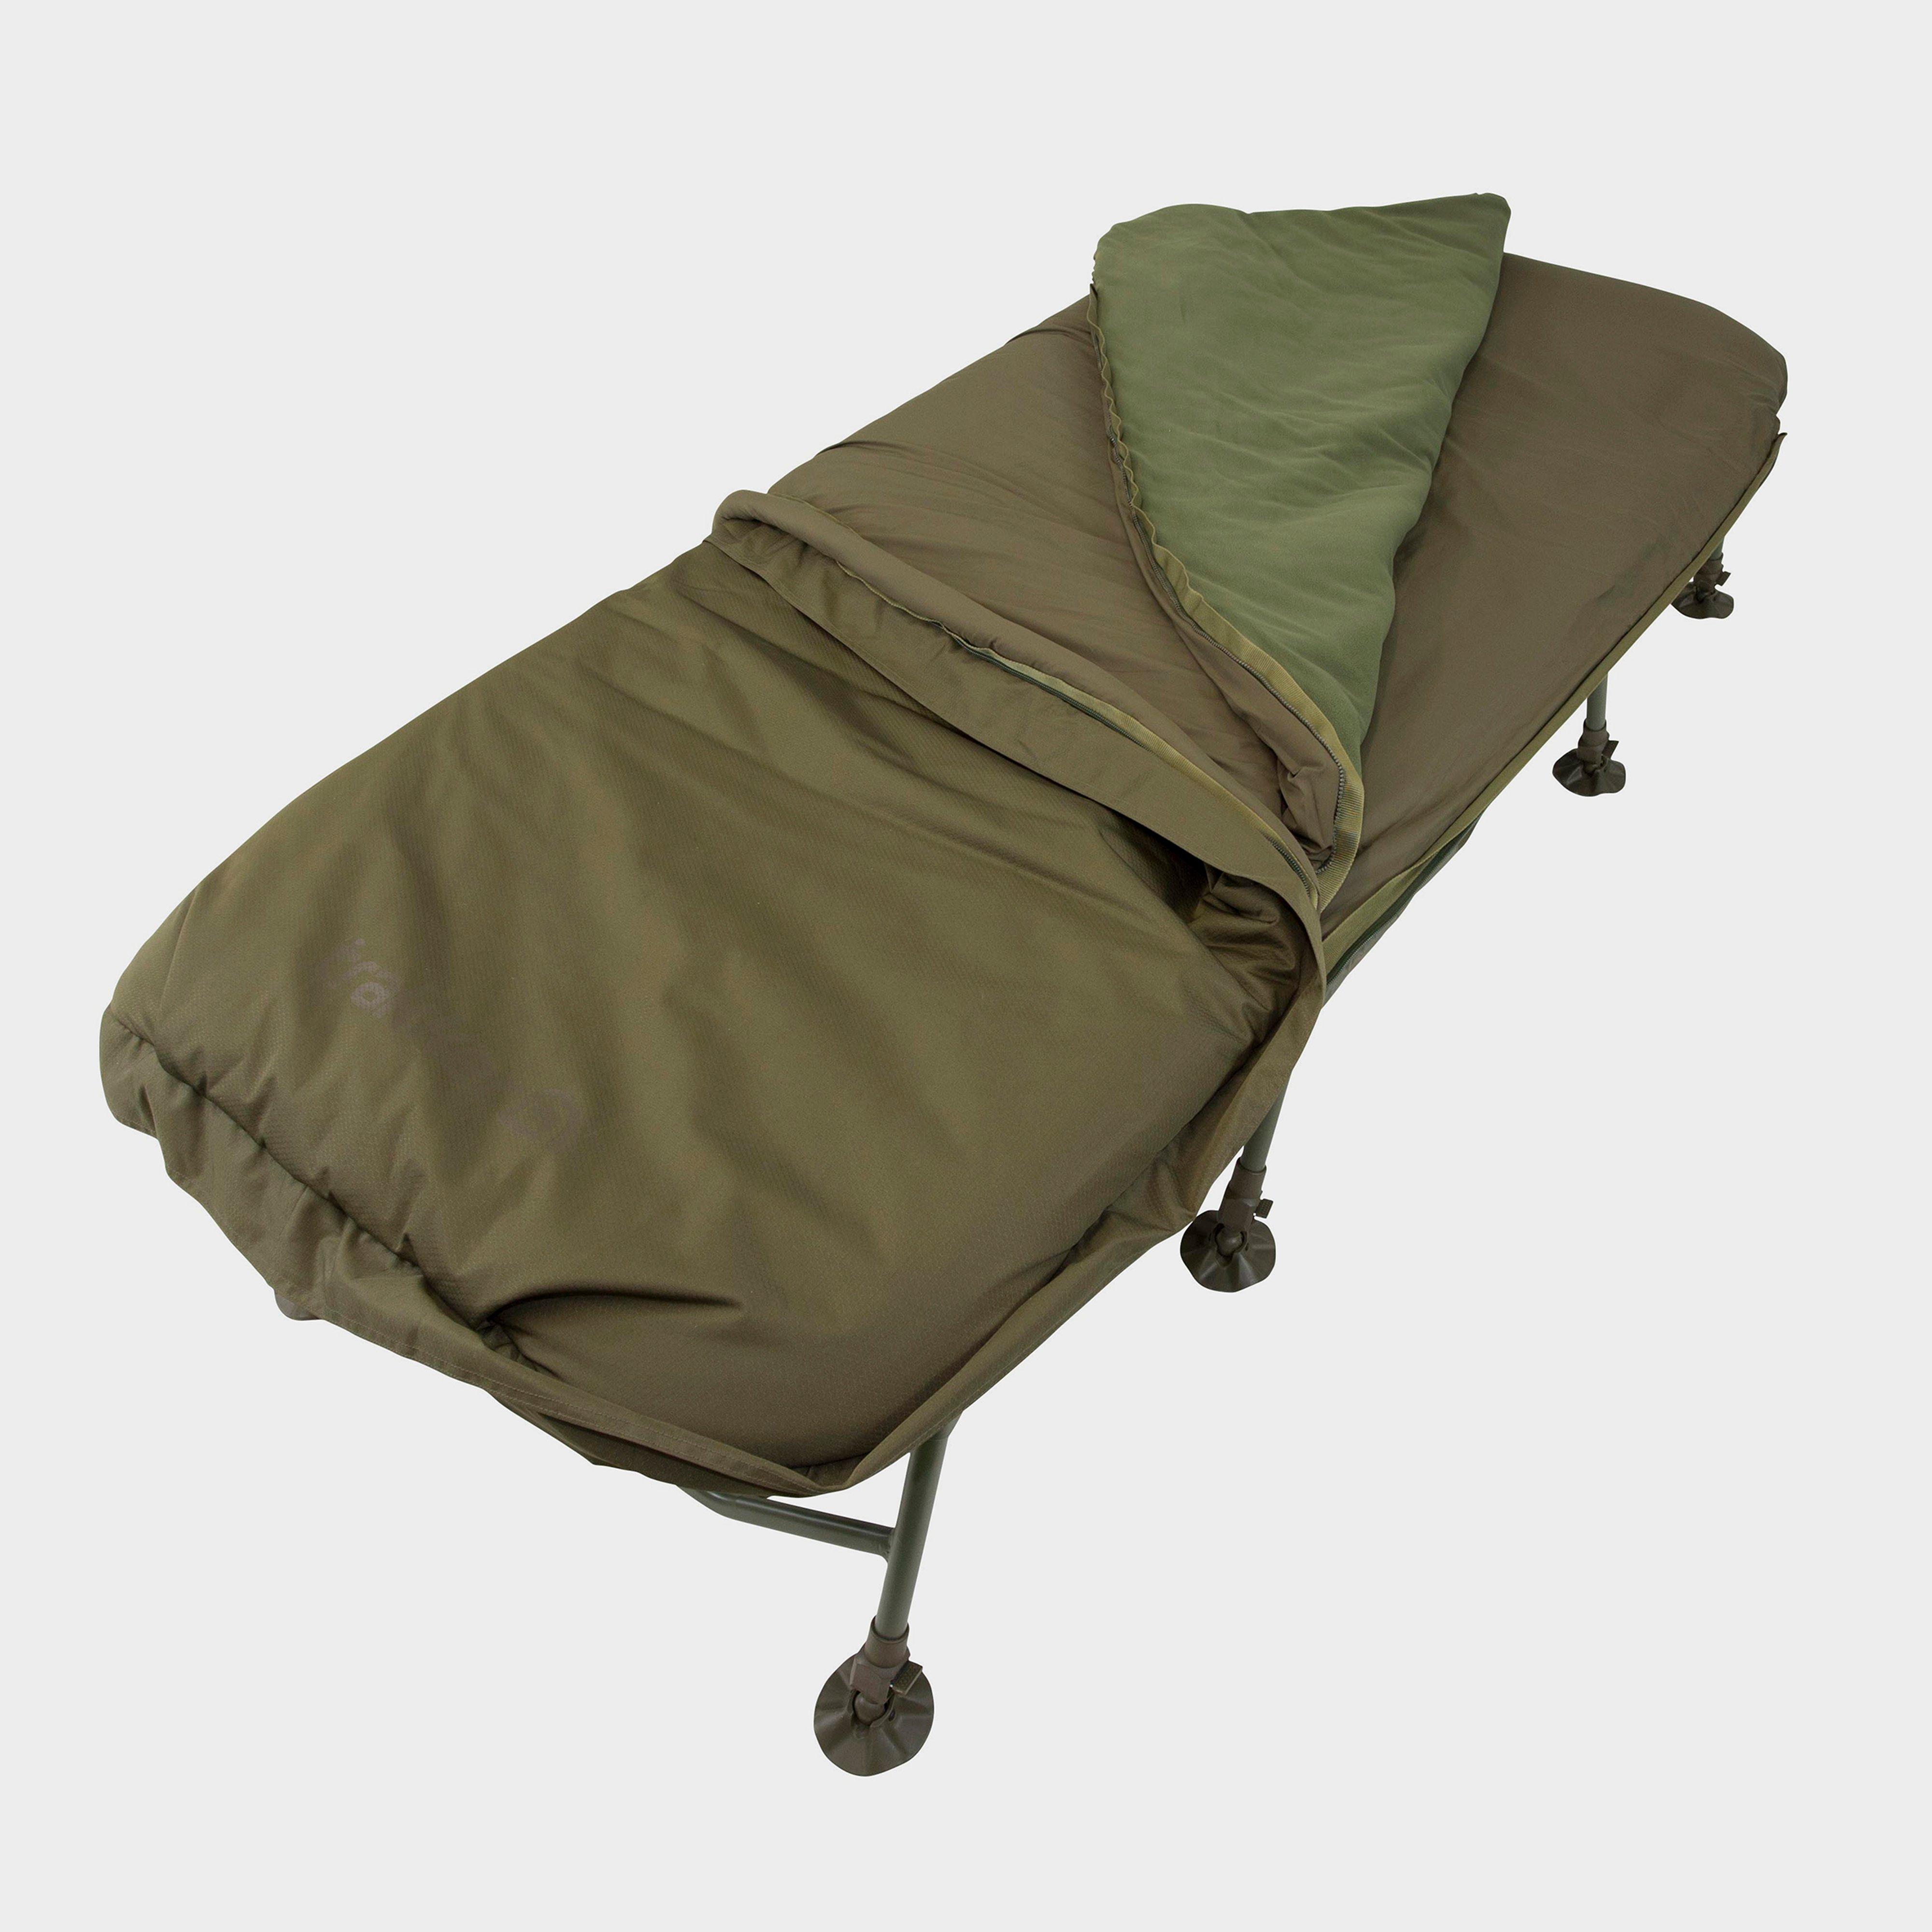  Trakker Rlx 8 Leg Bed System, Green